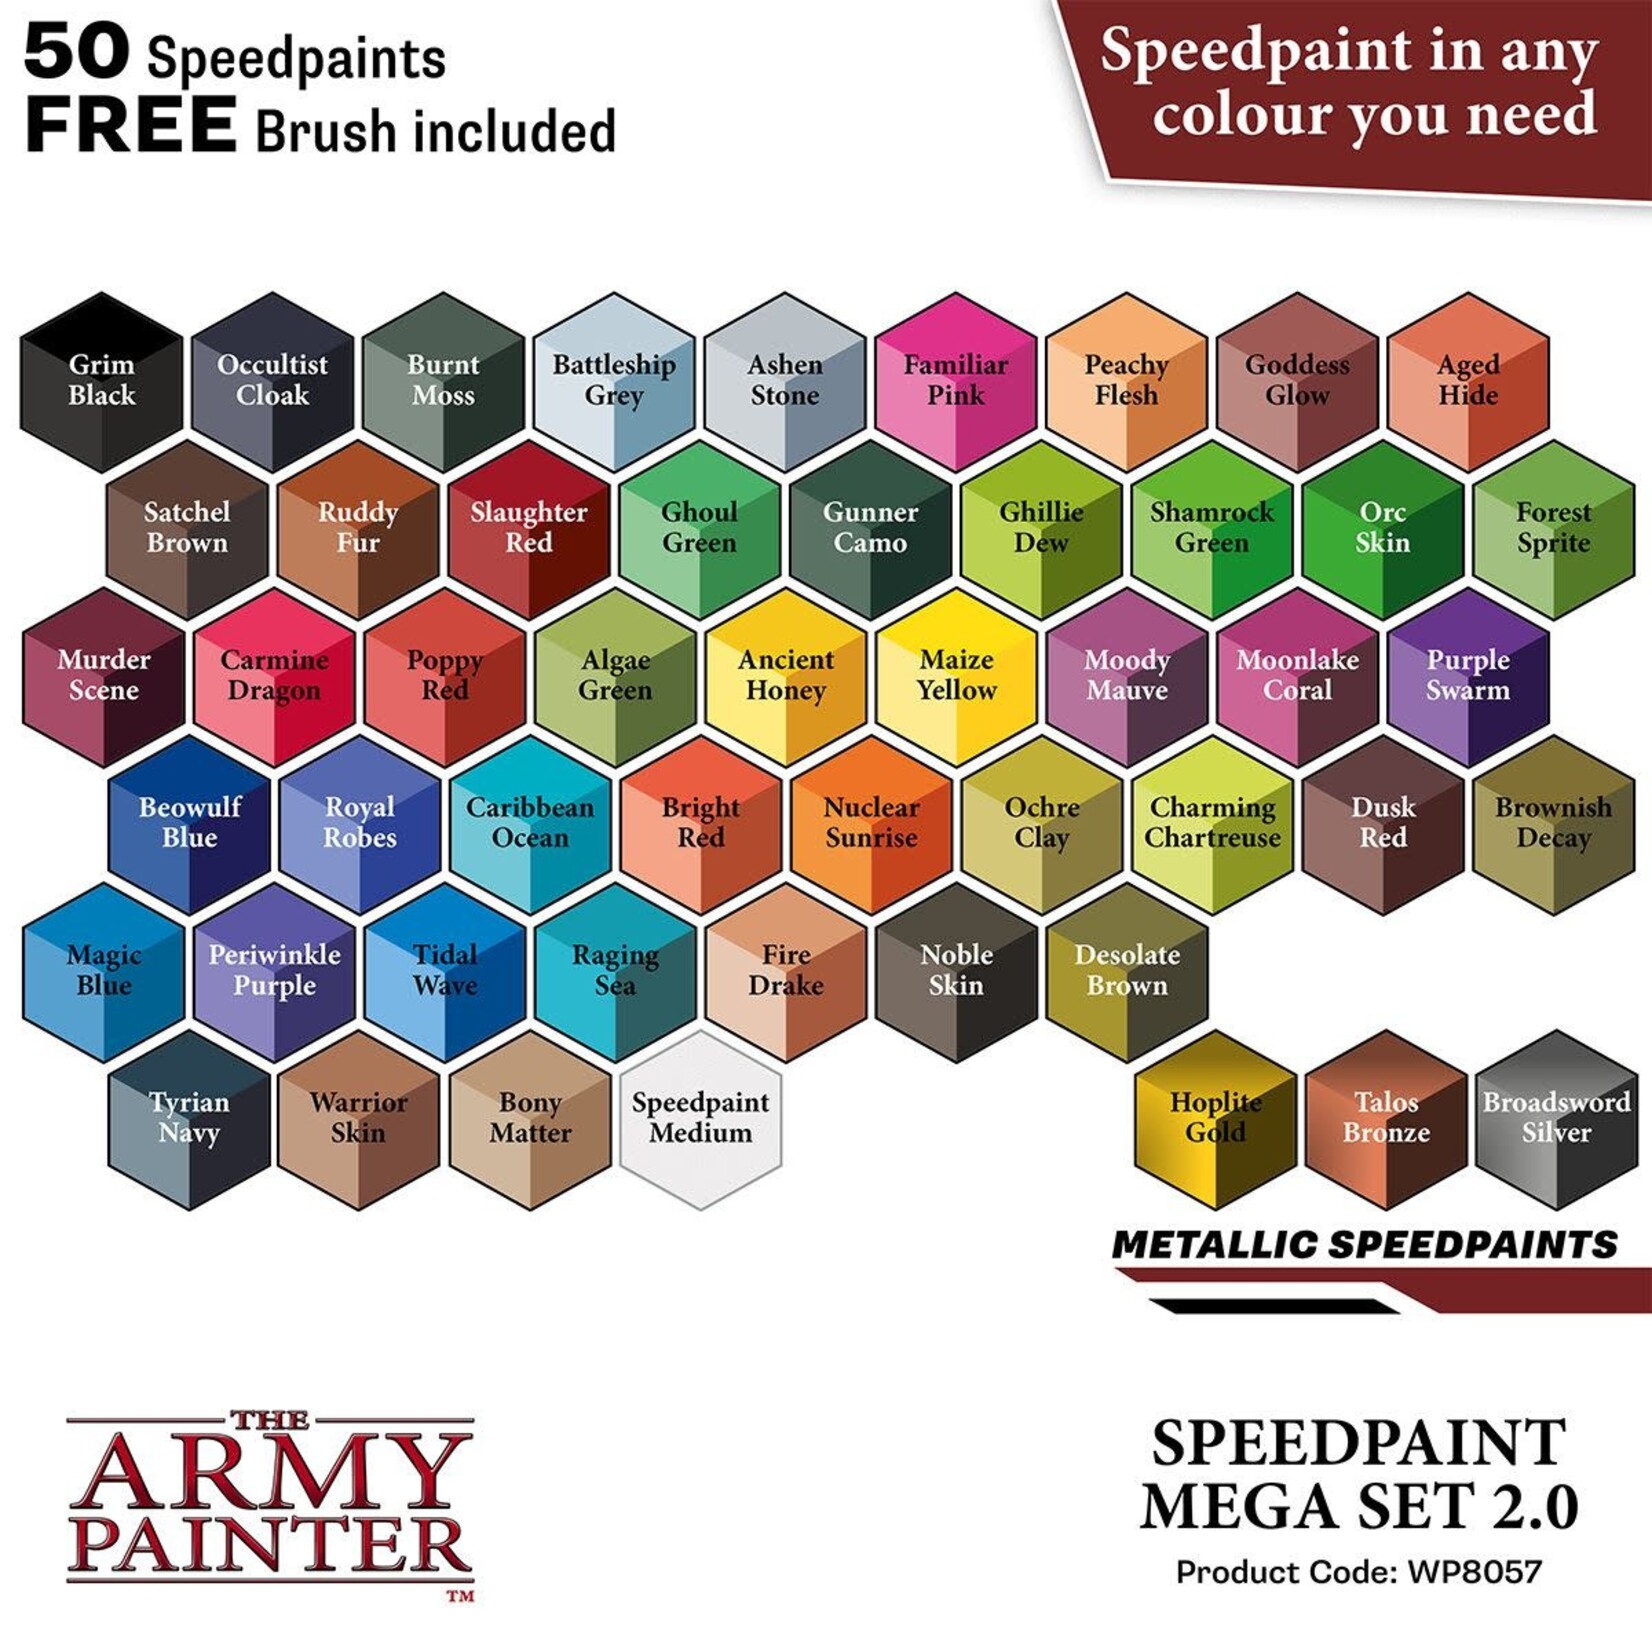 The Army Painter Speedpaint: Mega Set 2.0